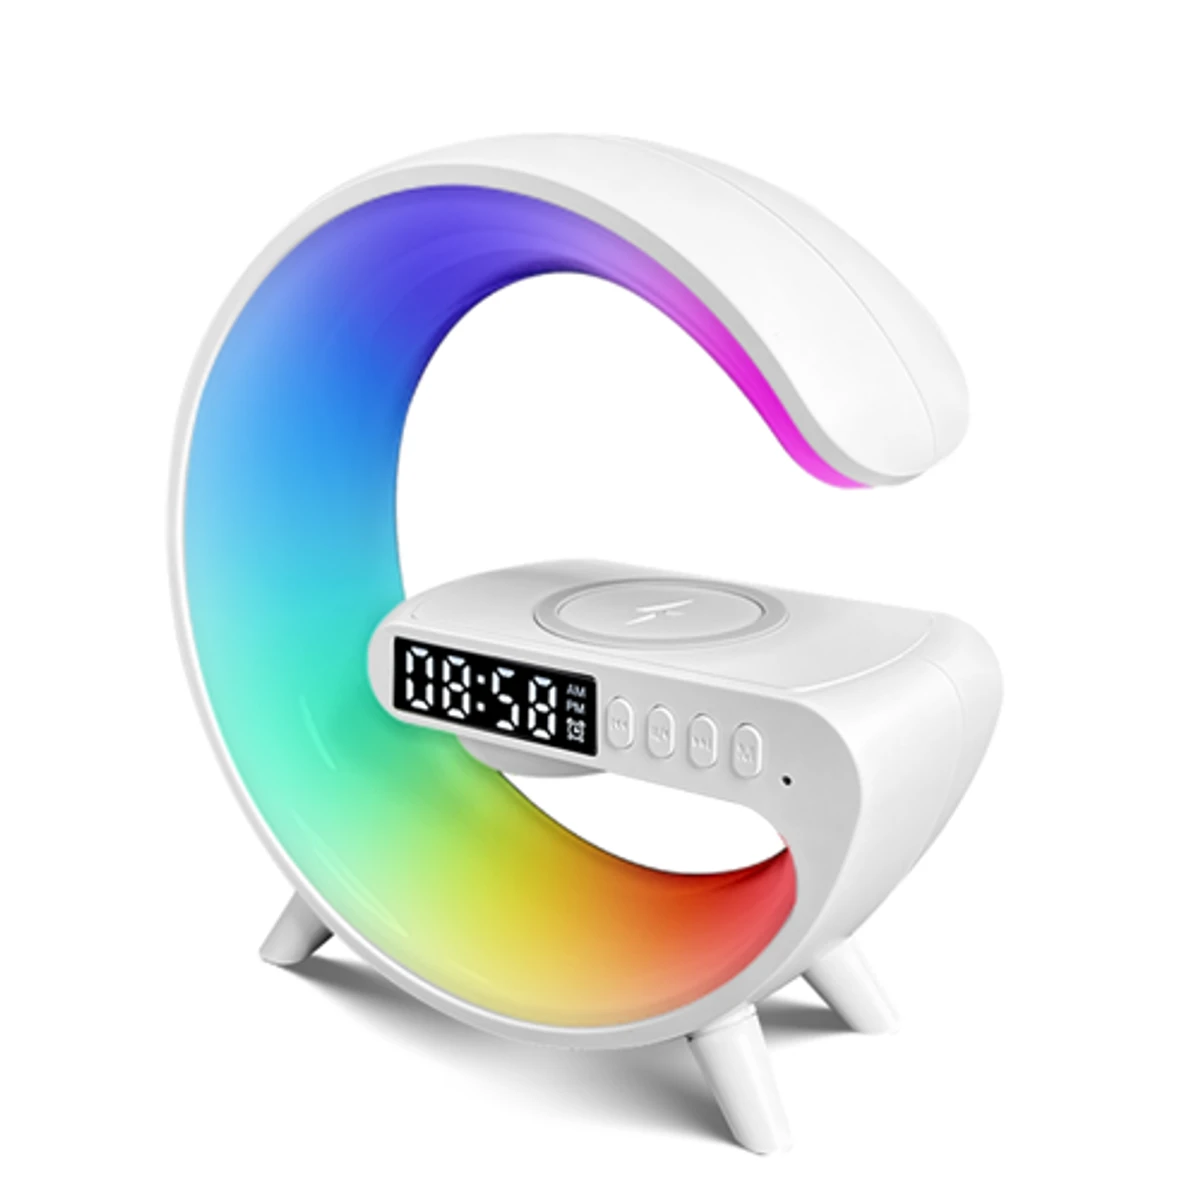 Multifunctional Wireless Charger Alarm Clock Bluetooth Speaker Night Light